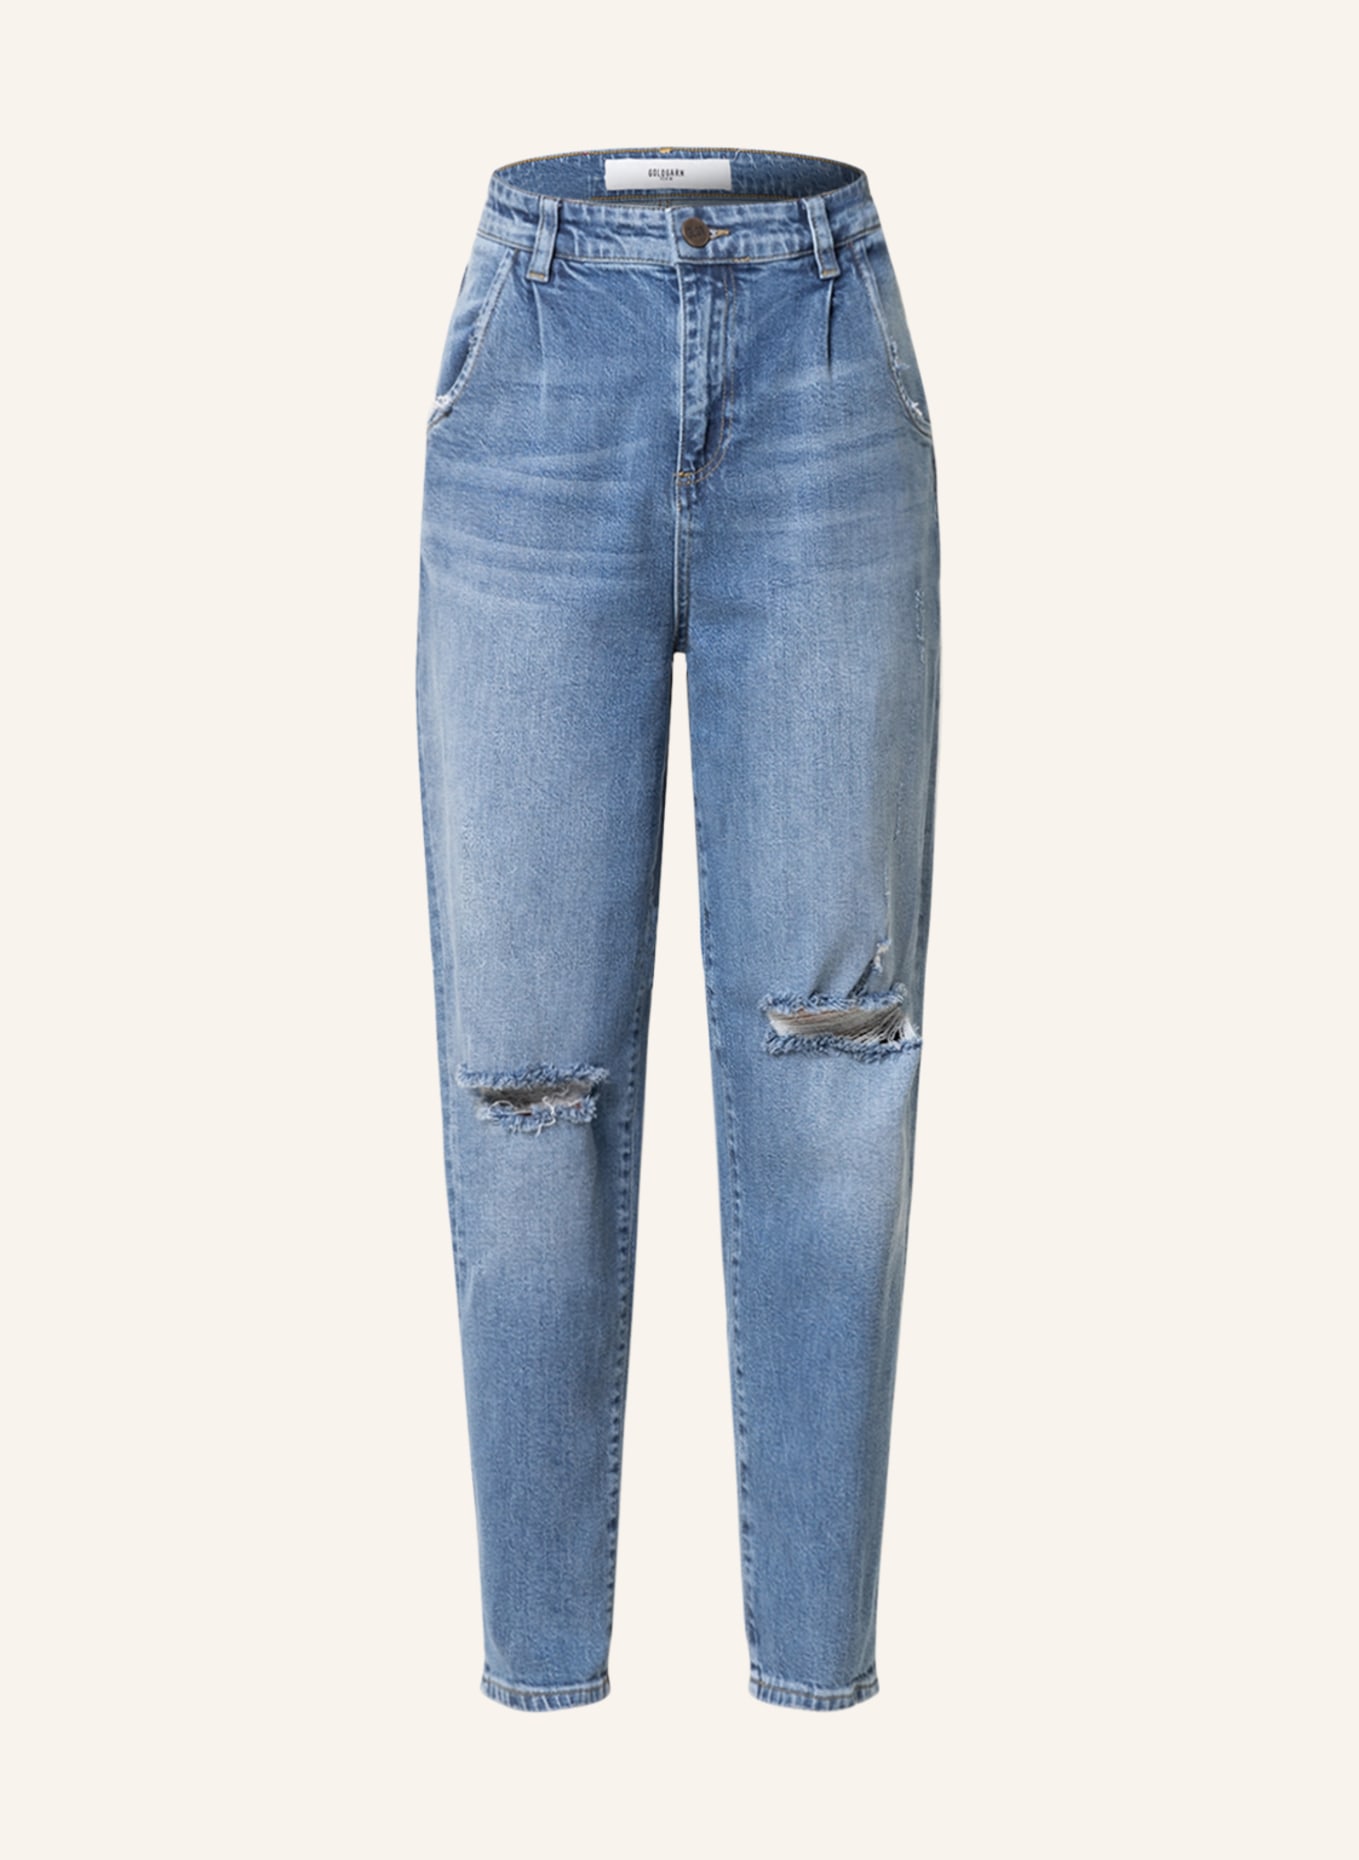 GOLDGARN DENIM Mom Jeans OSTSTADT, Farbe: 1010 vibtageblue (Bild 1)